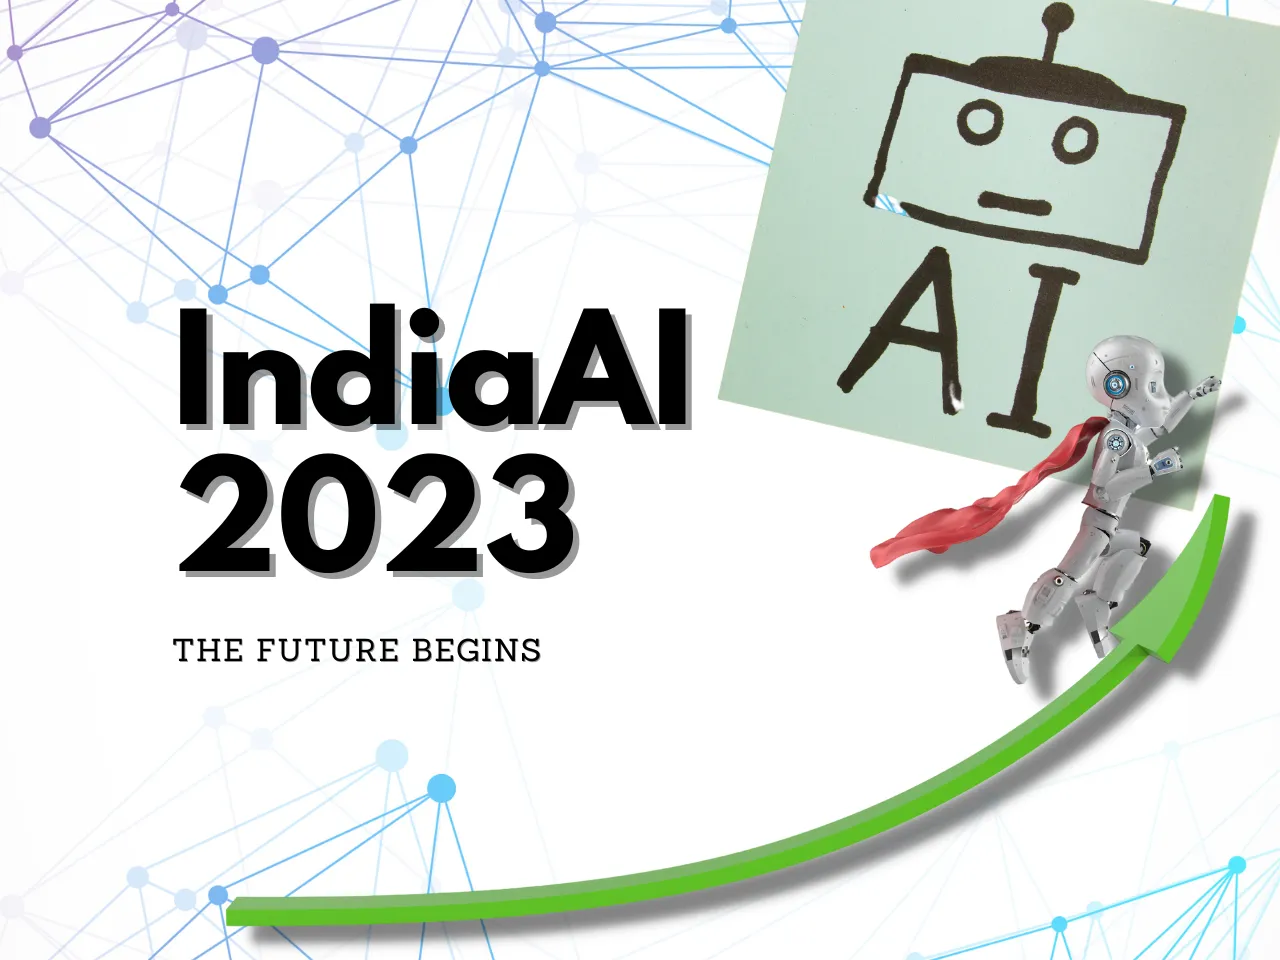 AI Dreams Take Flight: 'IndiaAI' Scheme Opens Doors for Startups